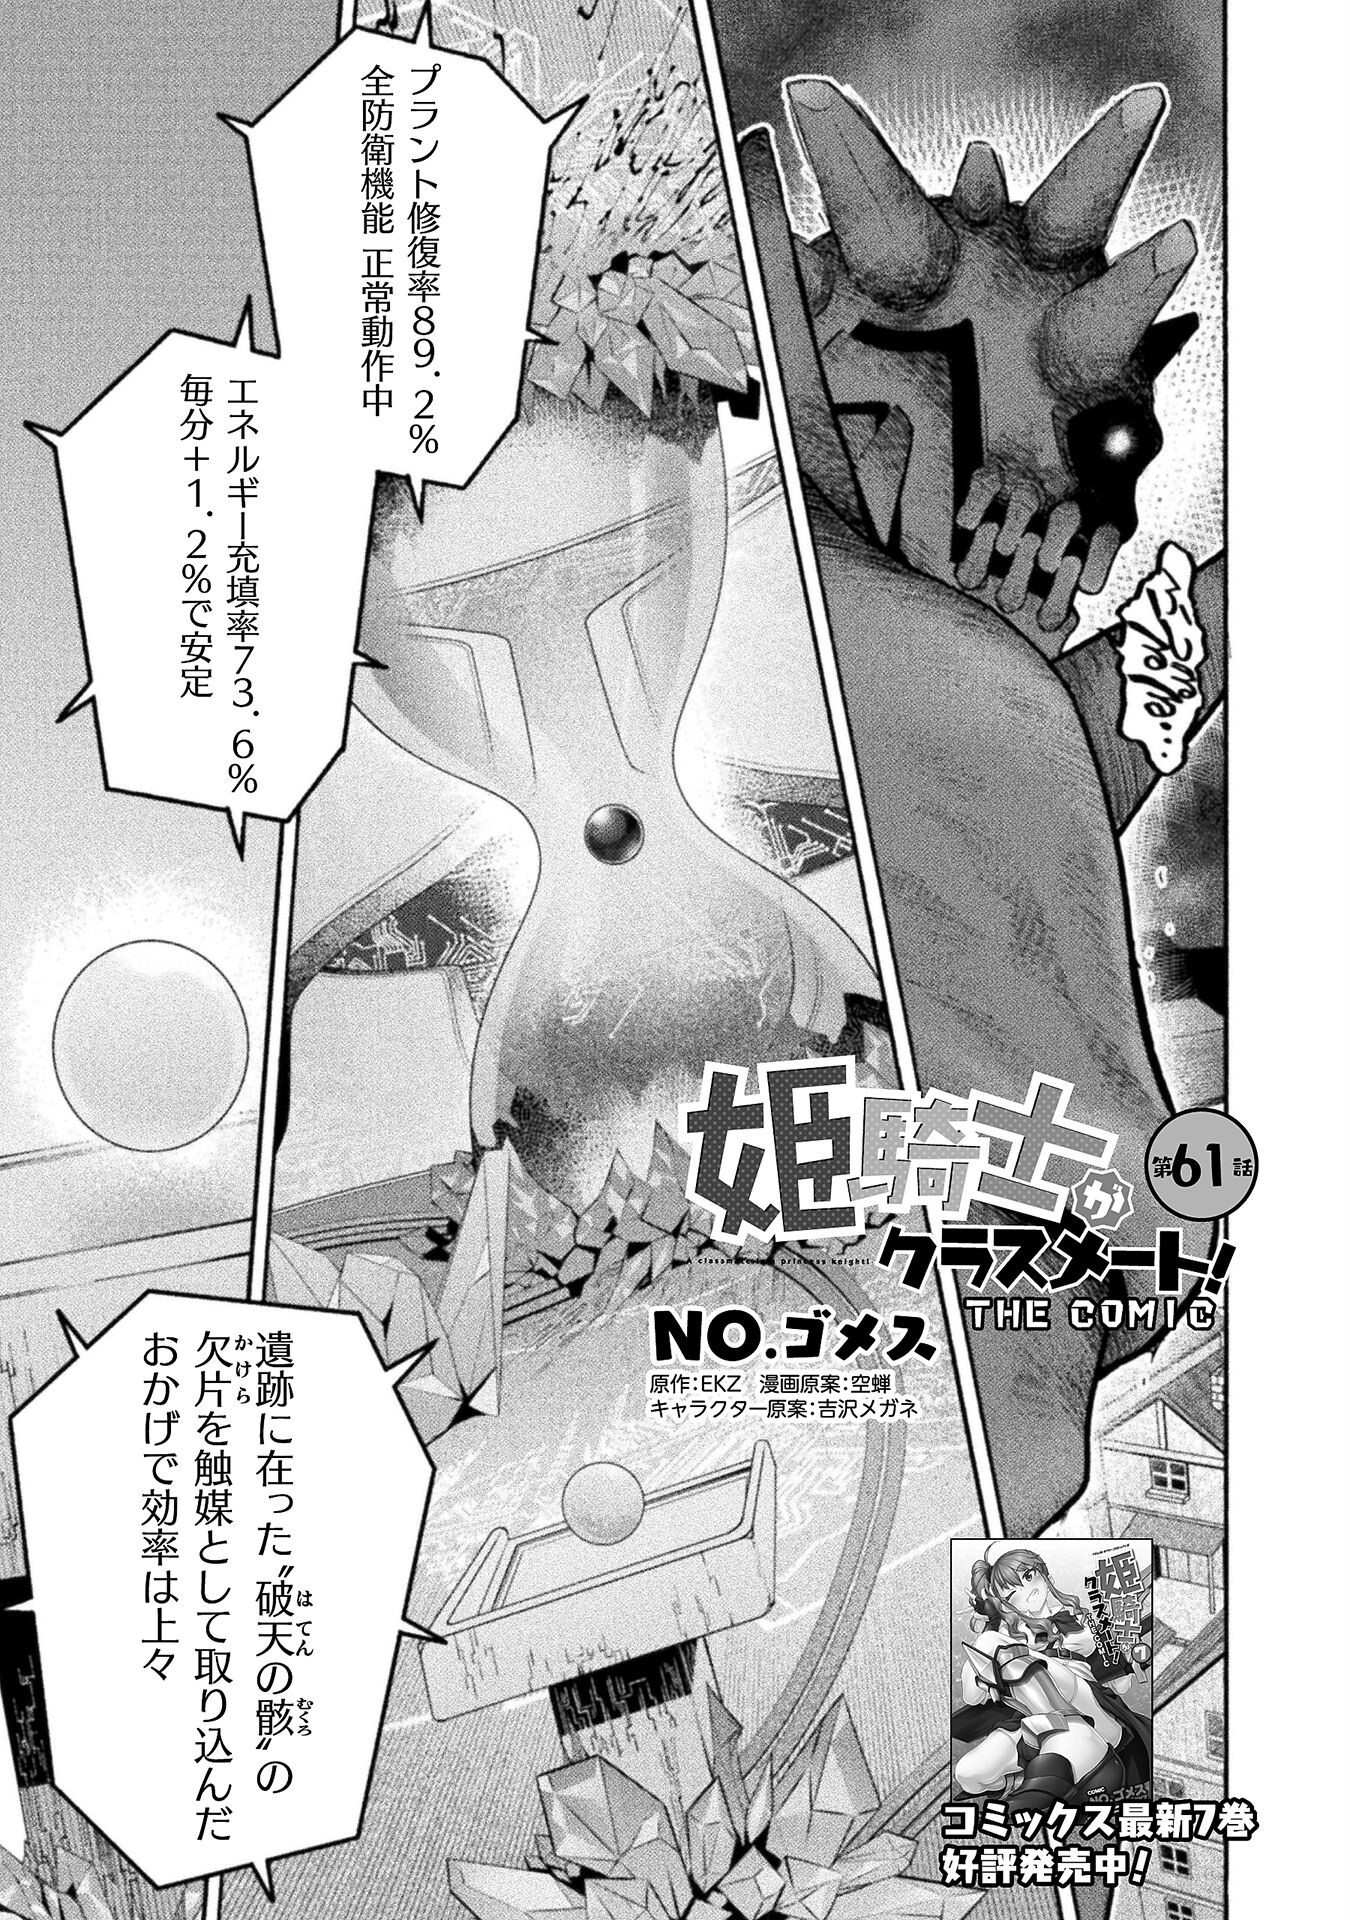 Himekishi ga Classmate! - Chapter 61 - Page 1